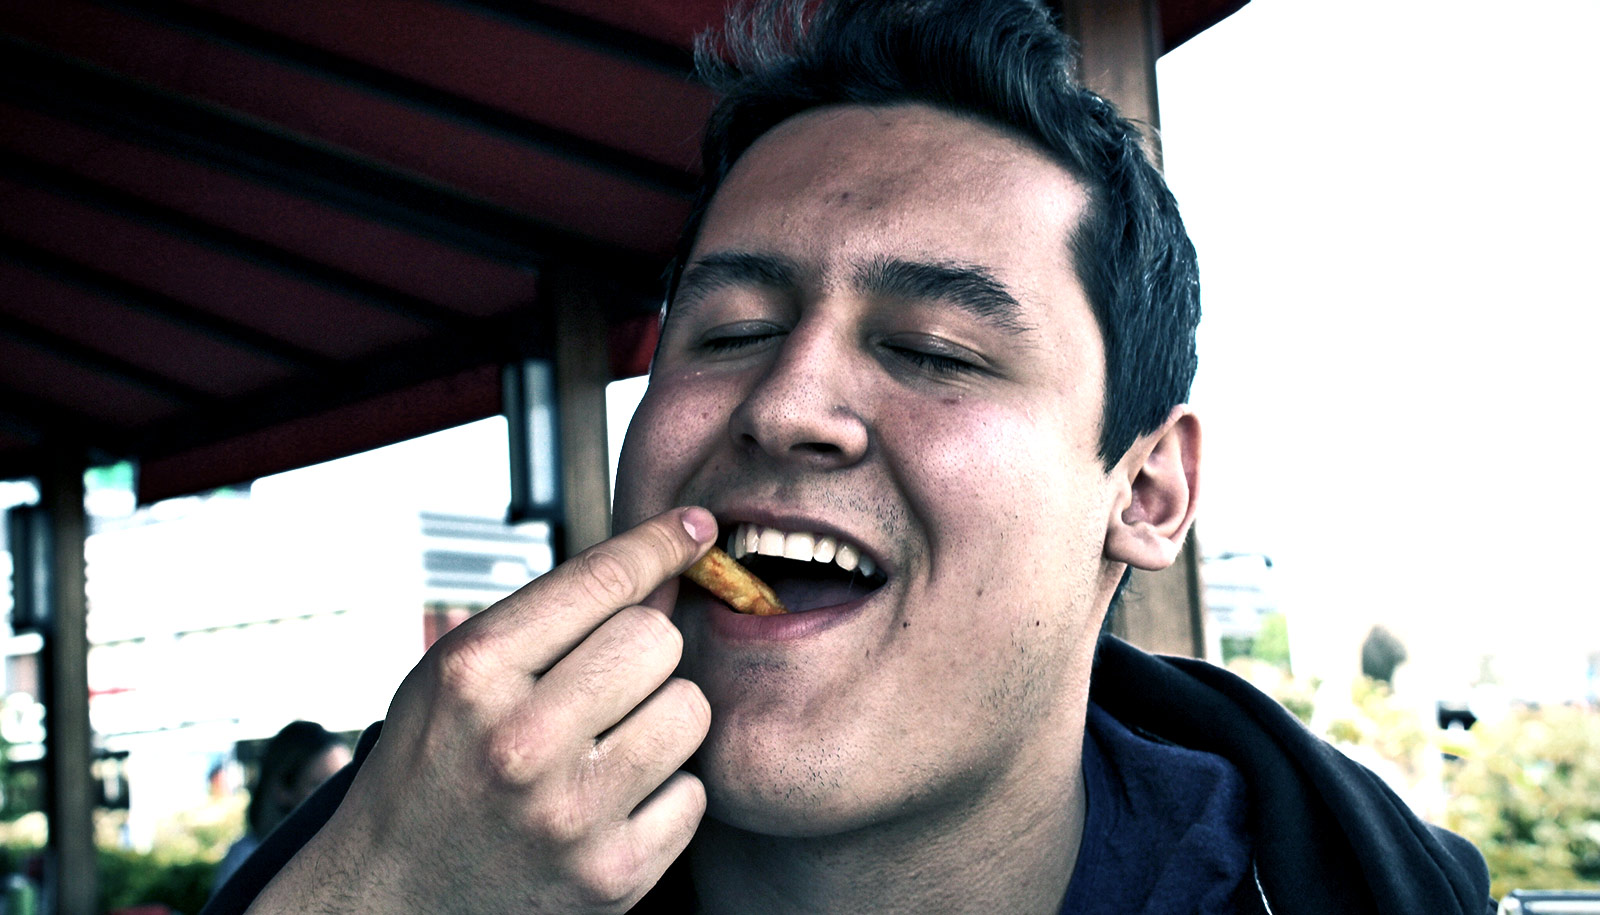 man-eating-fry-with-joy_1600.jpg